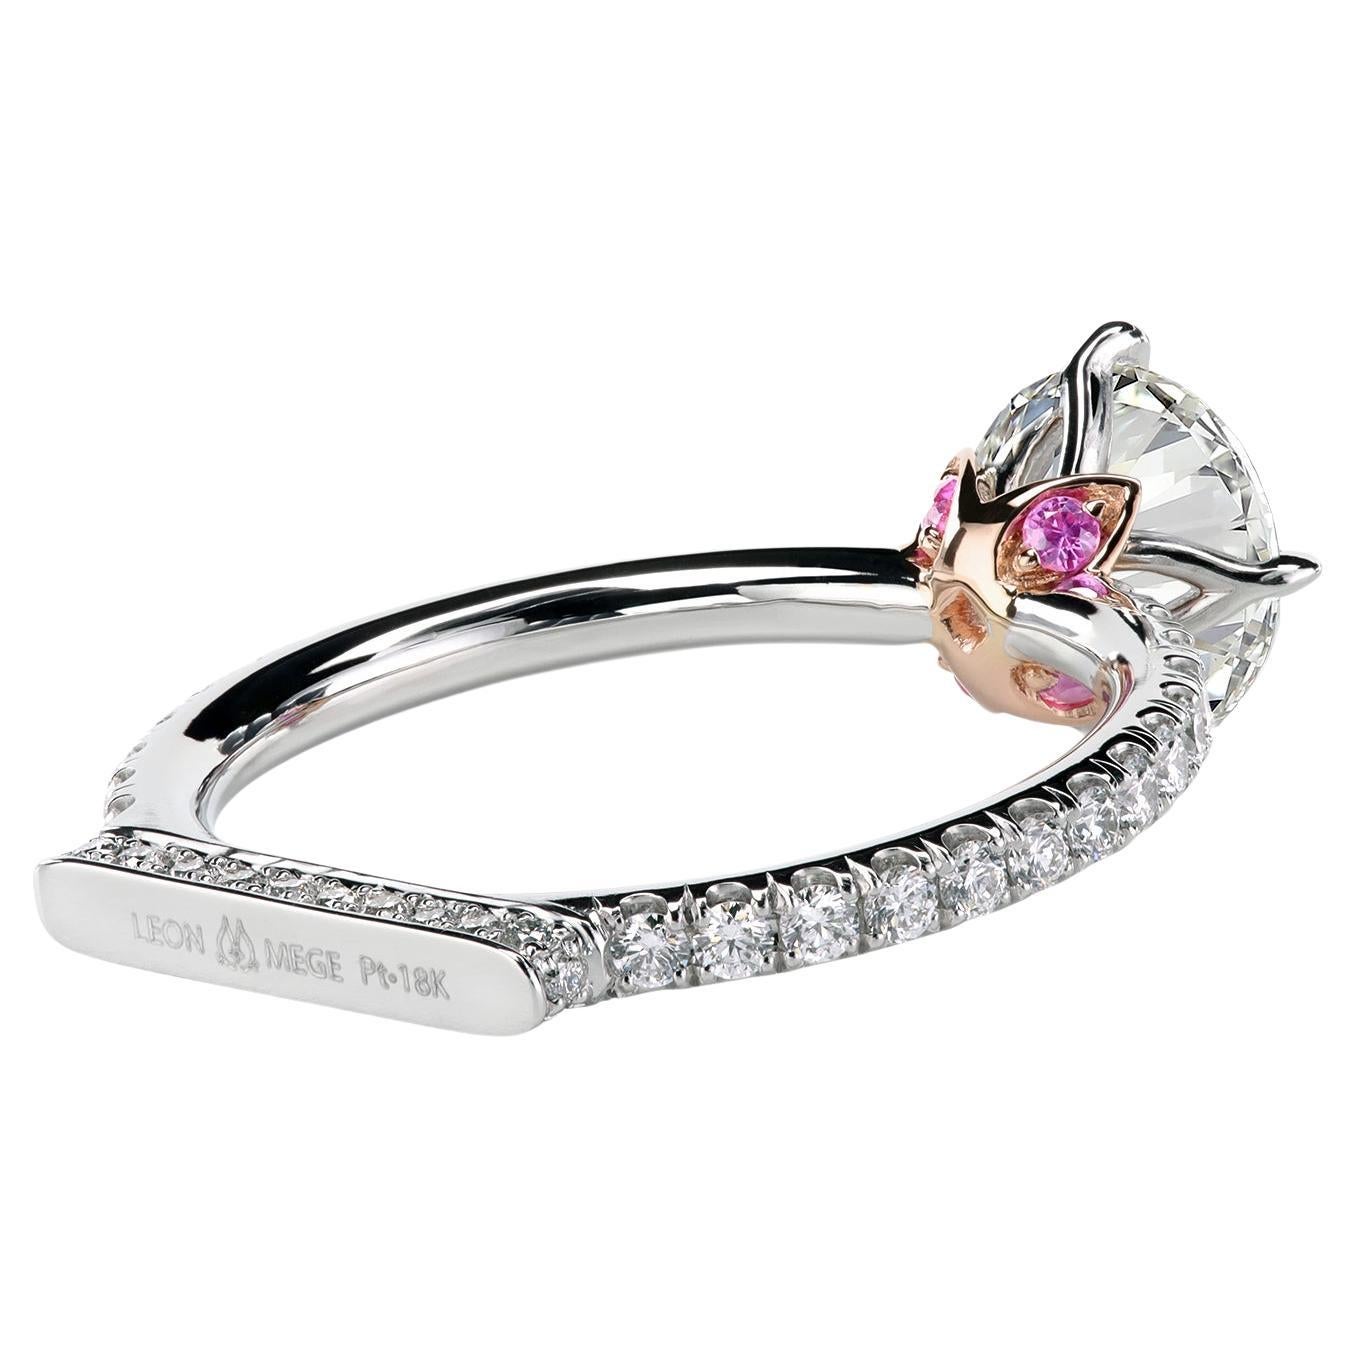 Leon Mege "Flamberge" Engagement Ring 2-carat GIA H/VS2 Round Diamond Micro Pave